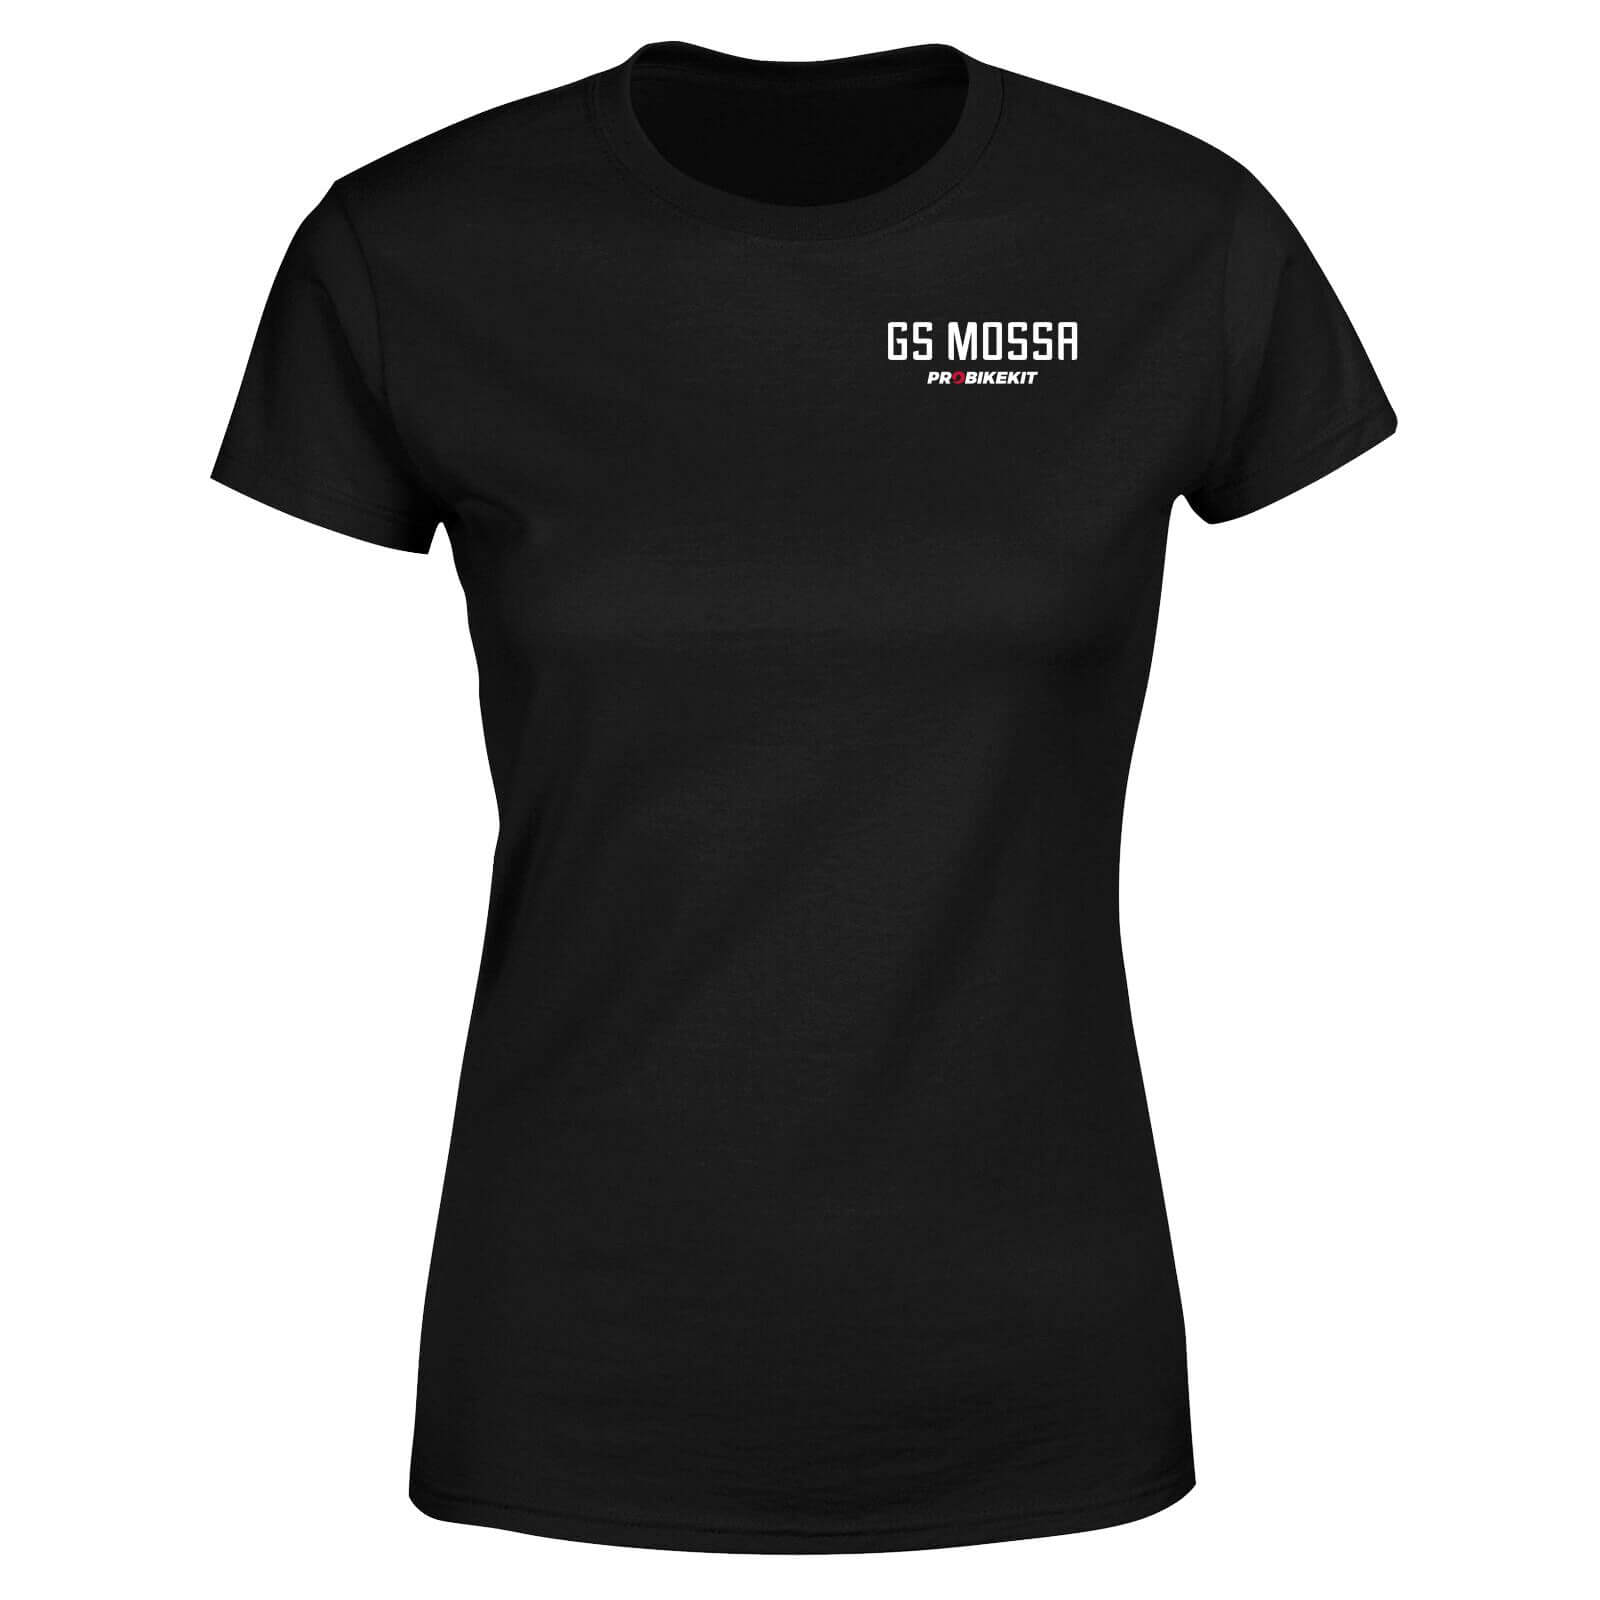 PBK GS Mossa Pocket Print Aqua Wave Women's T-Shirt - Black - XL - Black